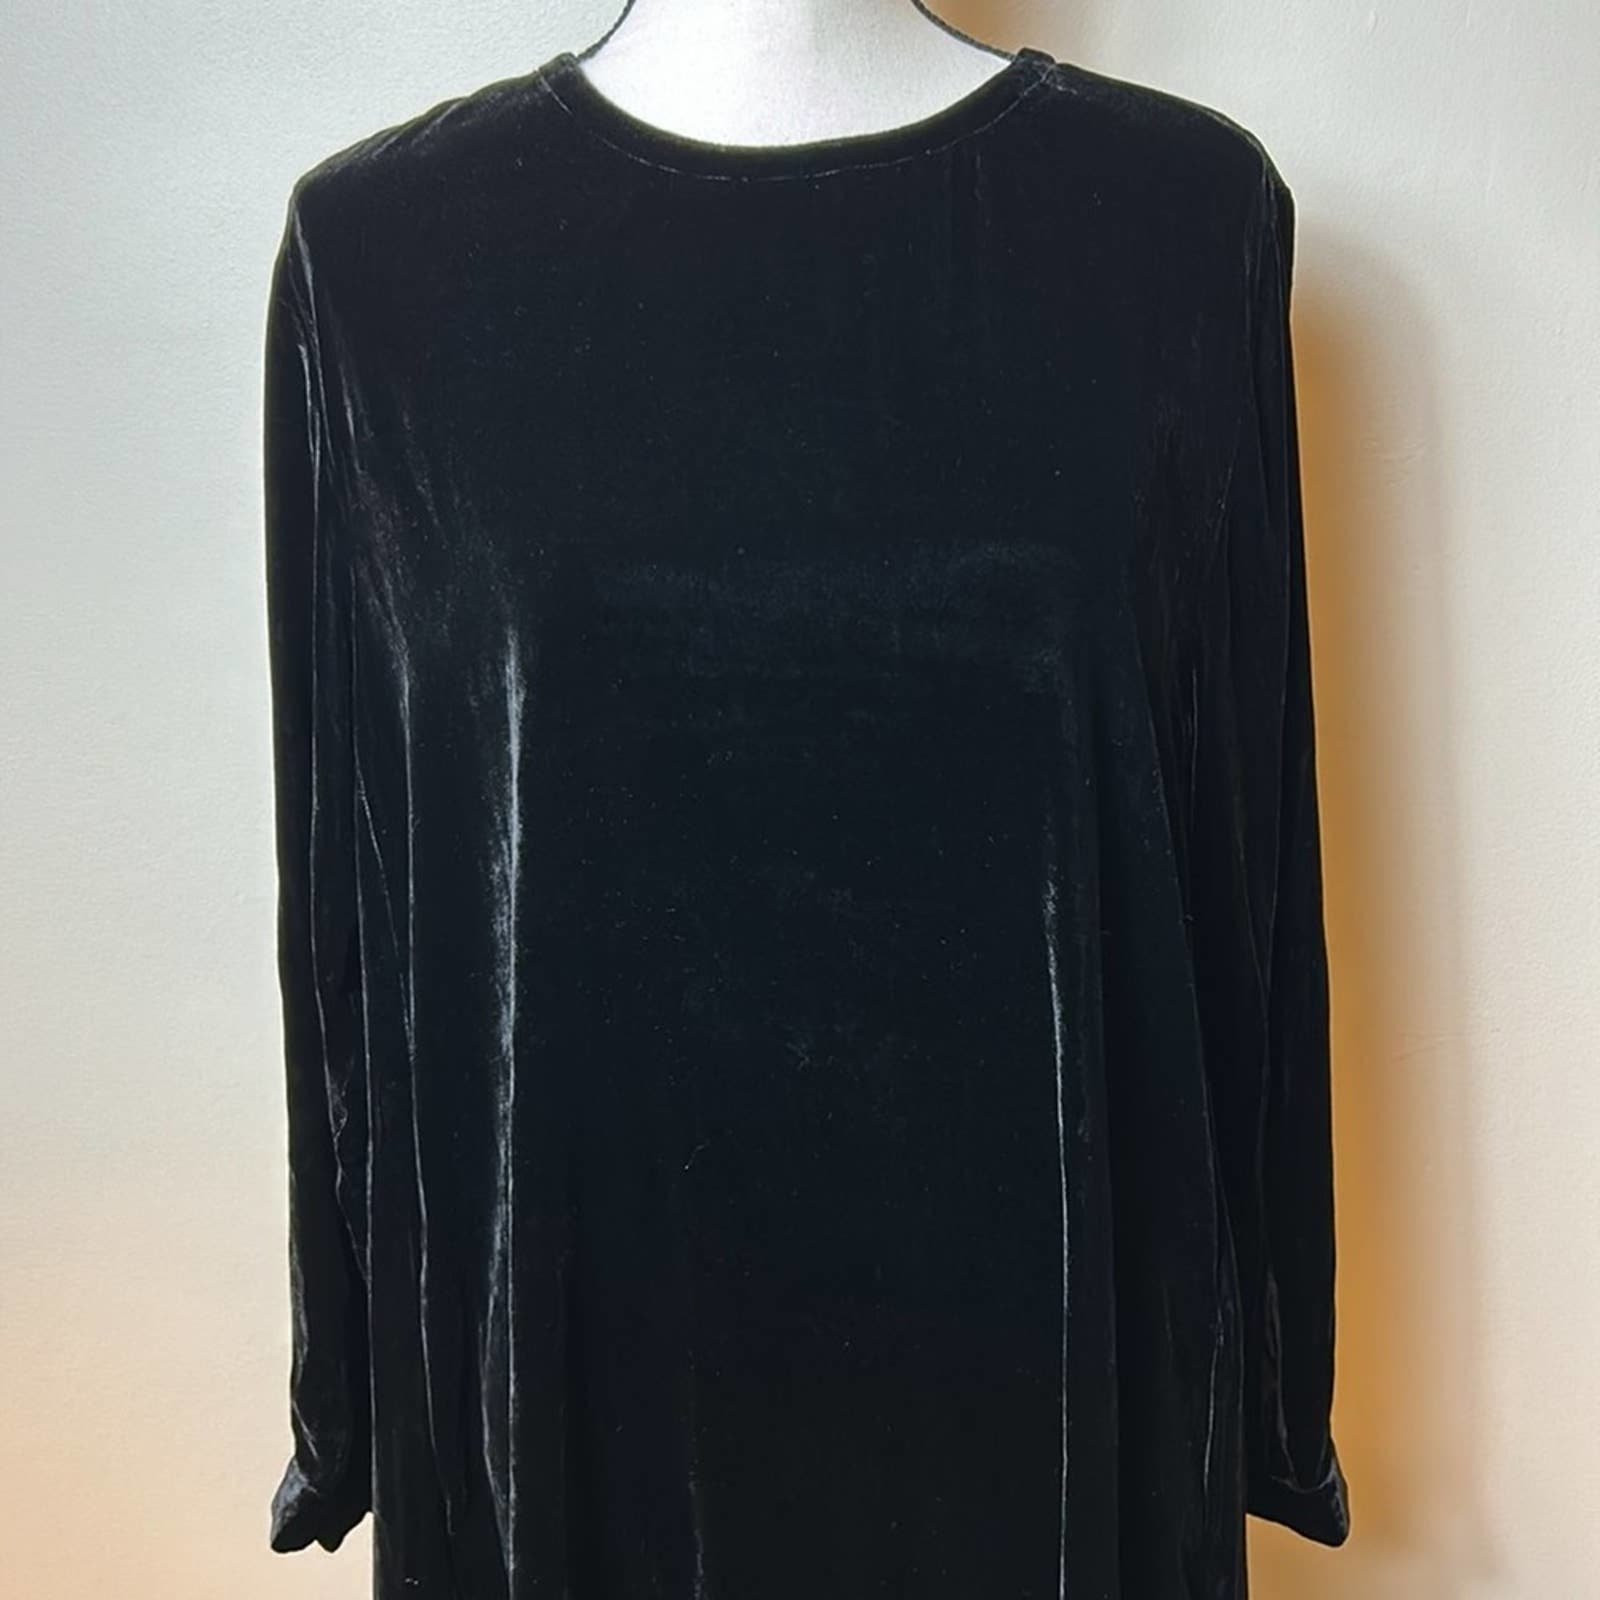 big discount NWT Eileen Fisher black Velvet silk blend Crew Neck Dress, S HKjpPpZaS hot sale